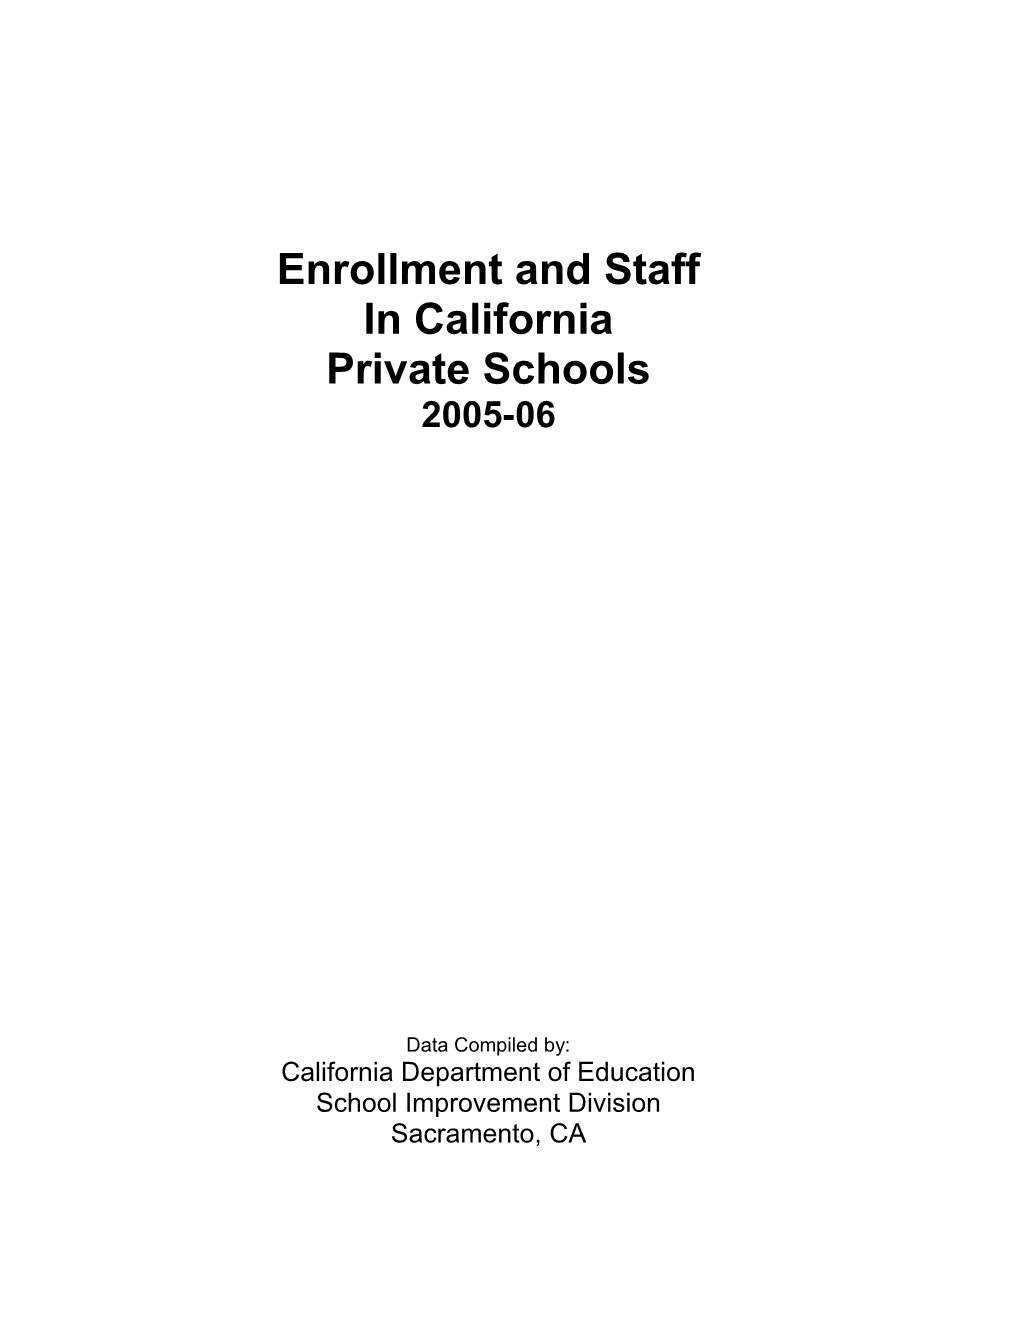 Enrollment & Staff in CA Private Schls 2005-06 - Private Schools (CA Dept of Education)